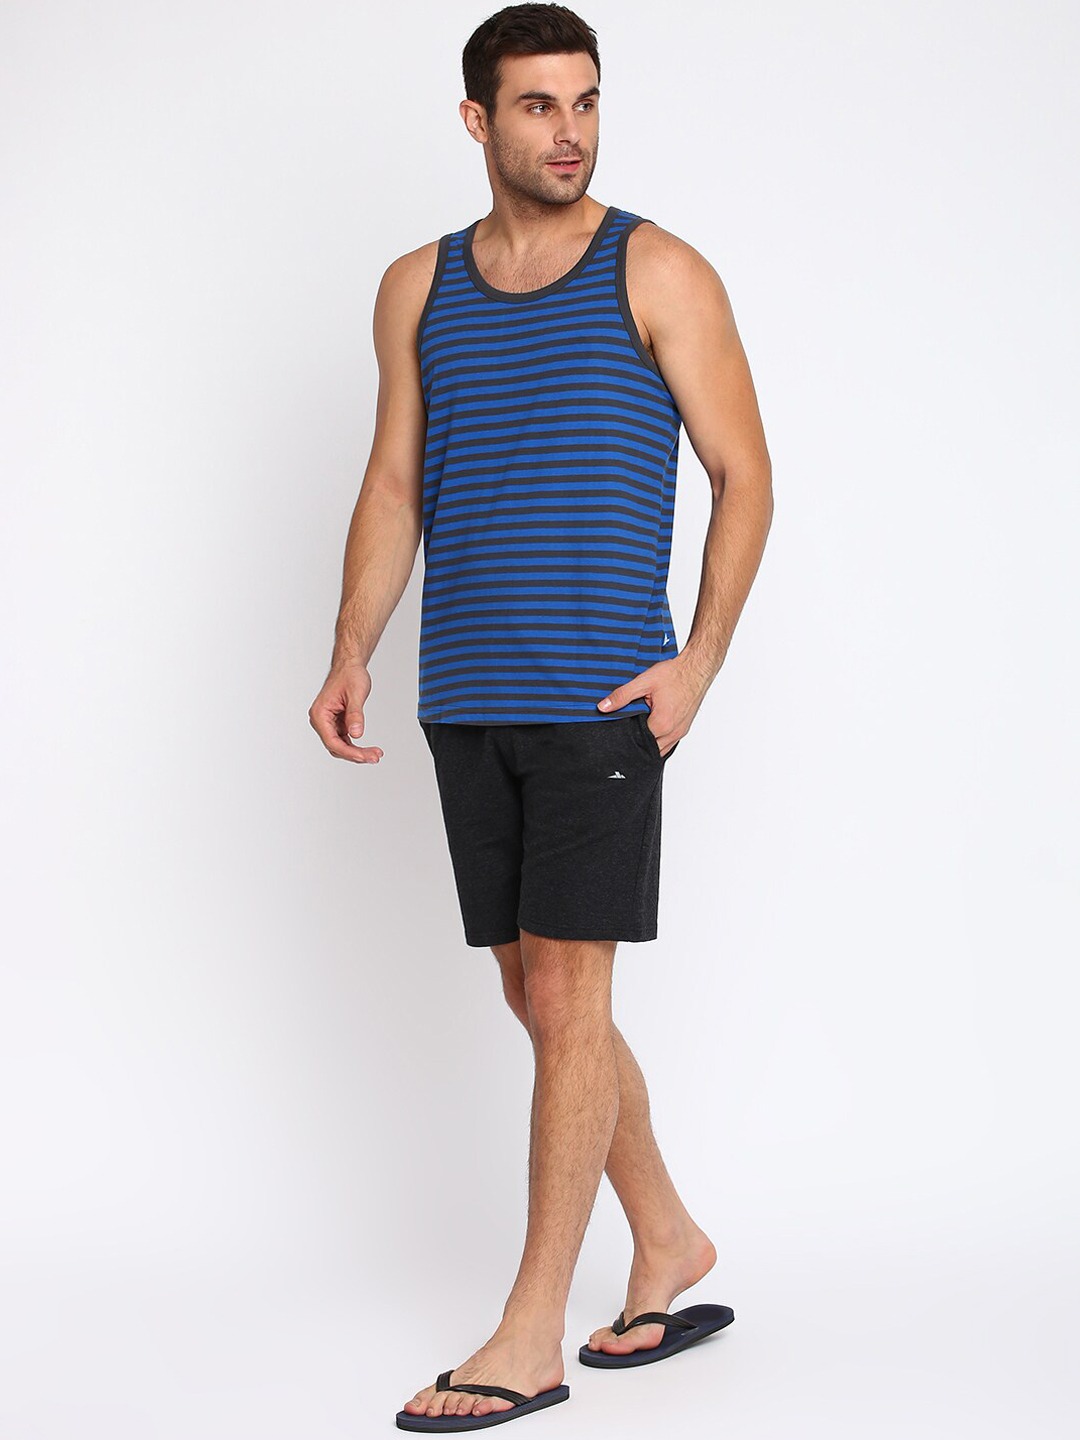 Clothing Innerwear Vests | SPARROWHAWK Men Blue & Black Striped Cotton Sustainable Innerwear Vests - IY82910